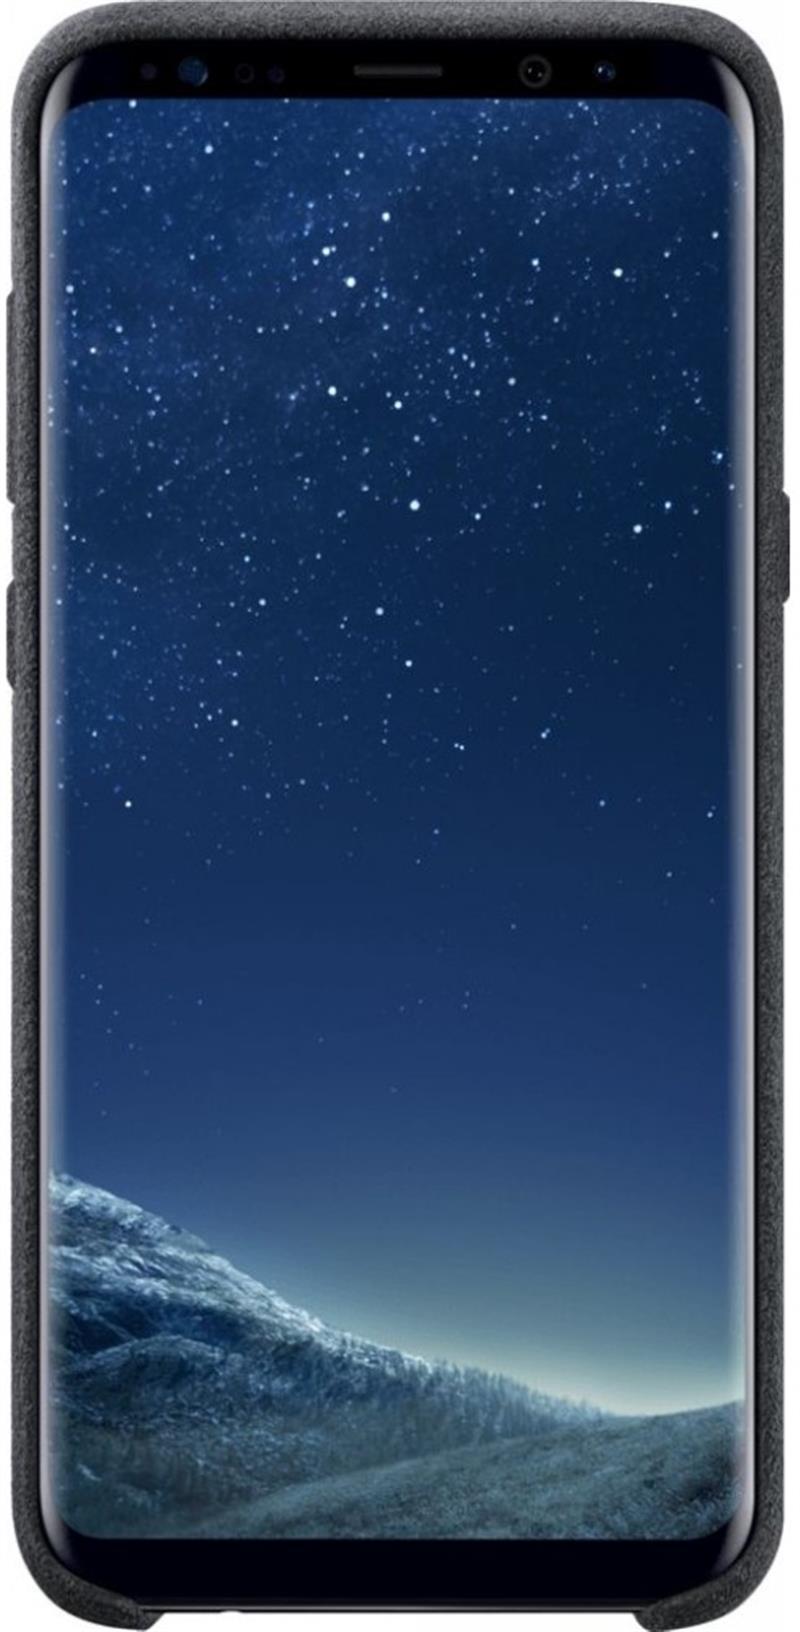  Samsung Alcantara Cover Galaxy S8 Black